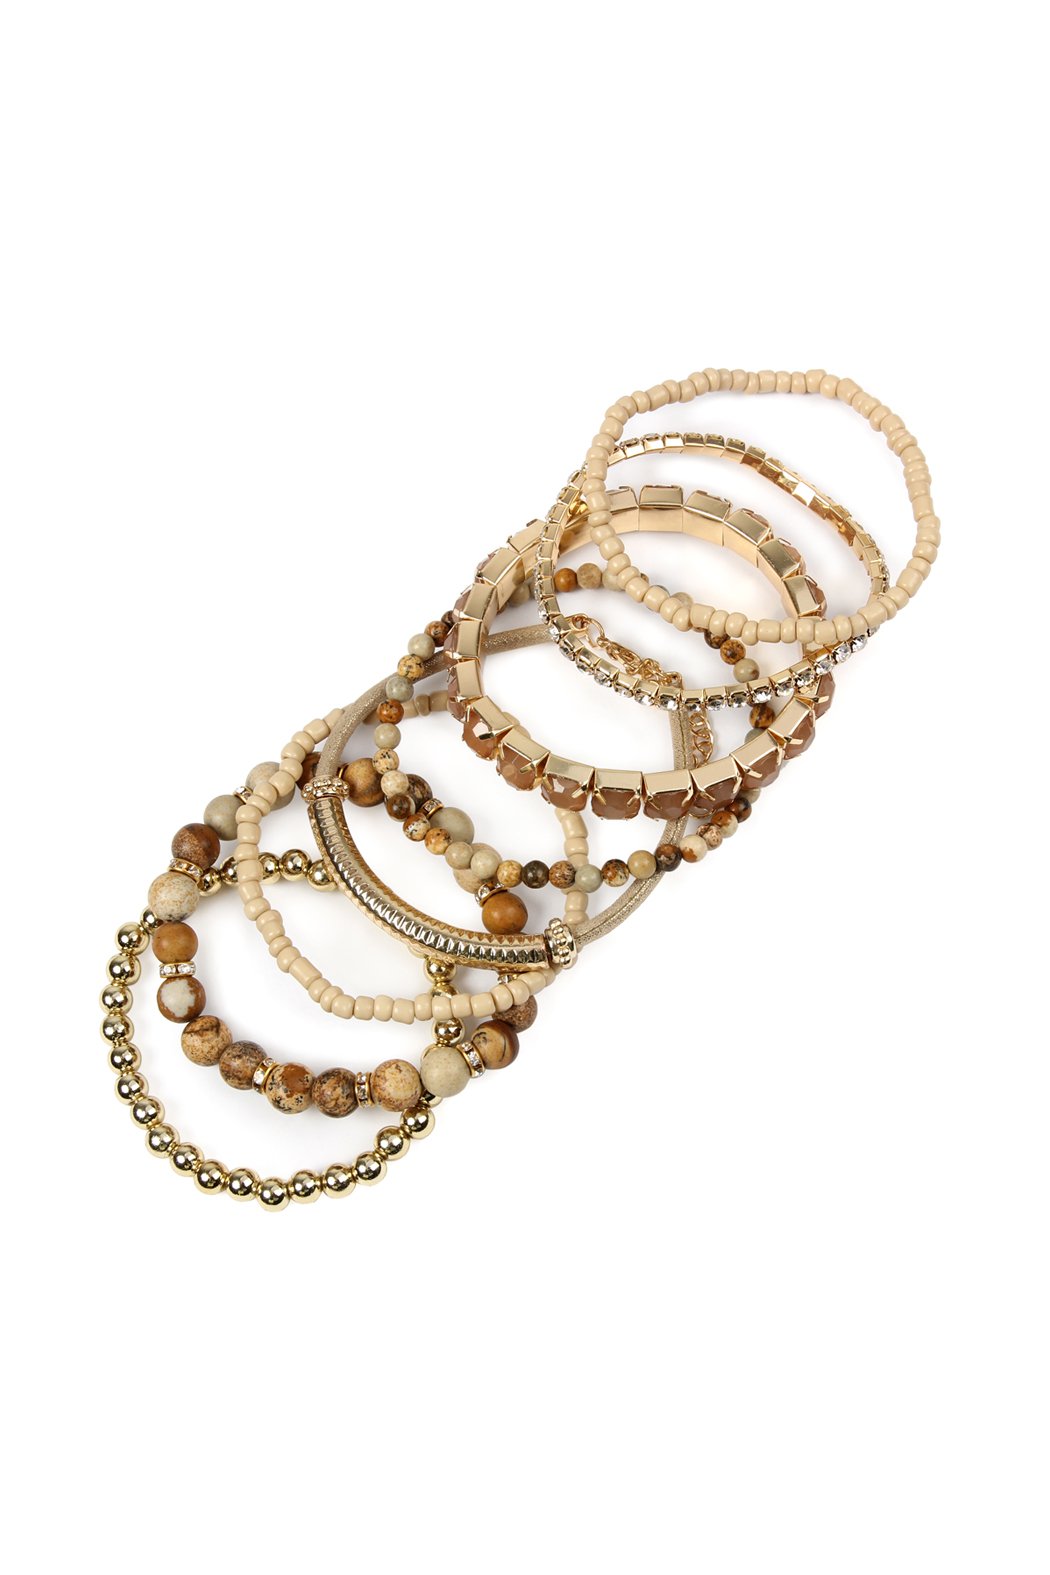 Hdb2269 - Plus Size Stackable Beads Bracelet Set - LOLA LUXE